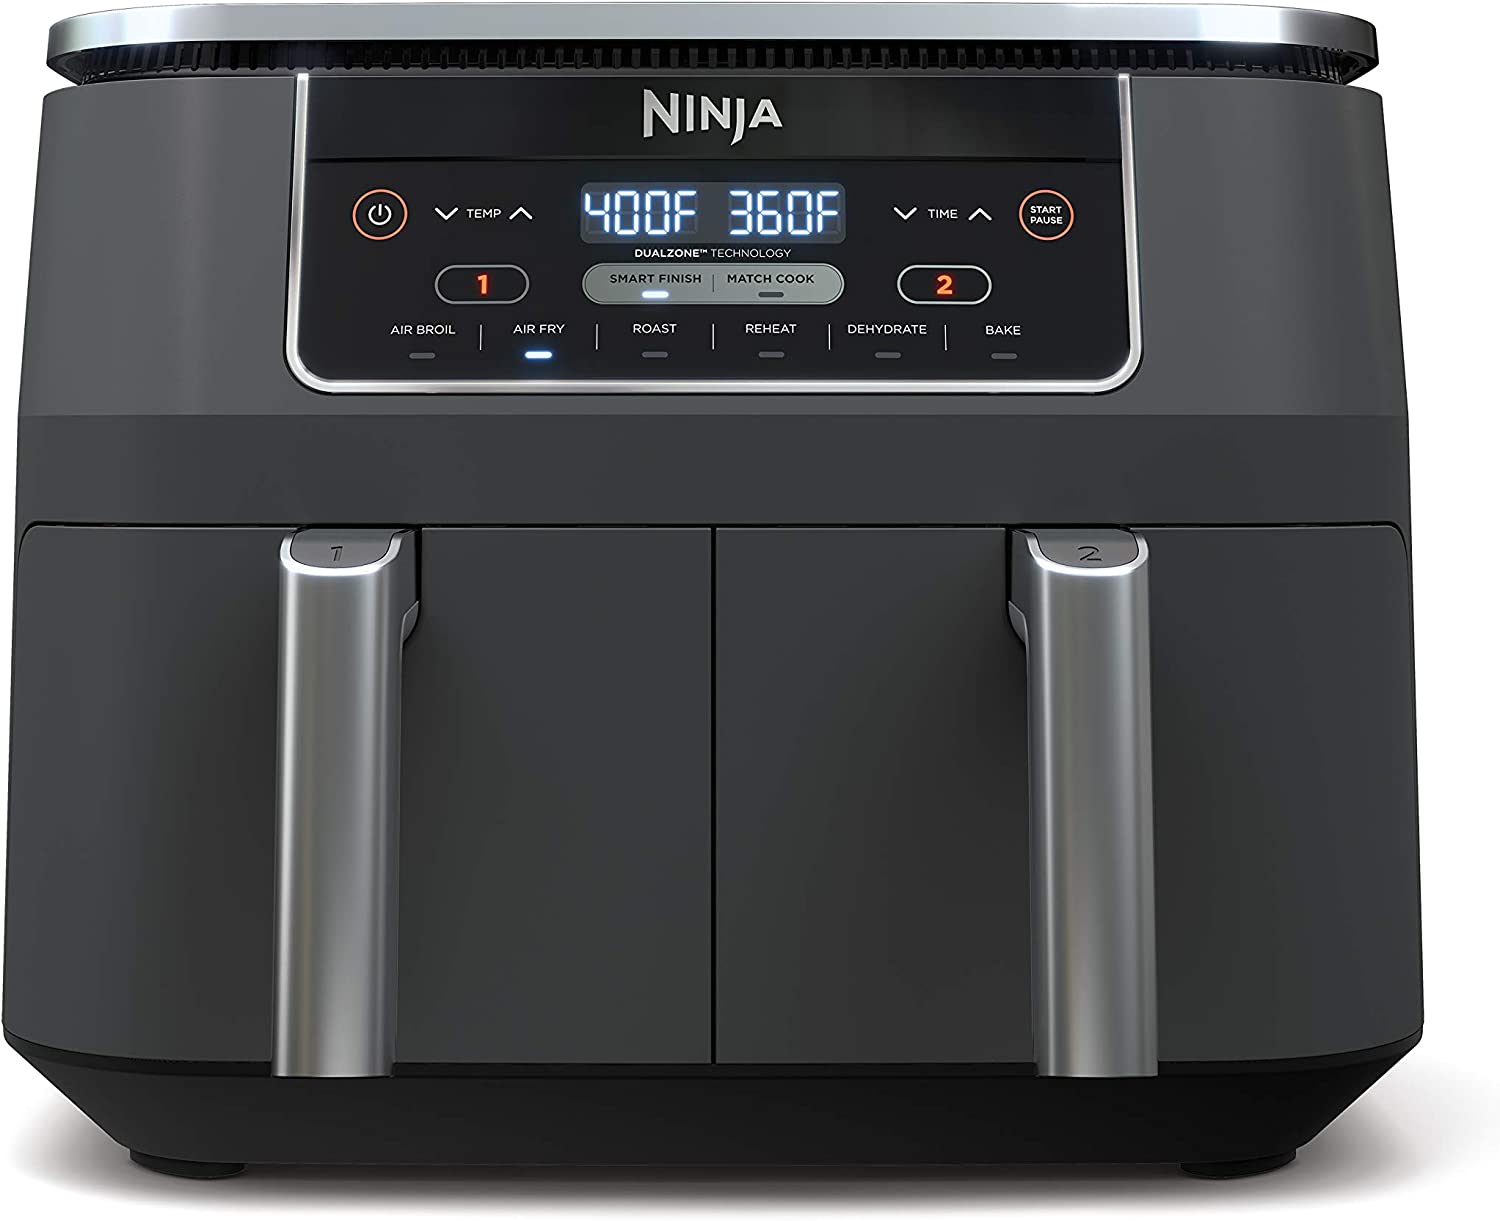 Ninja AF101 1550-Watt Programmable Base Air Fryer with 4-Quart